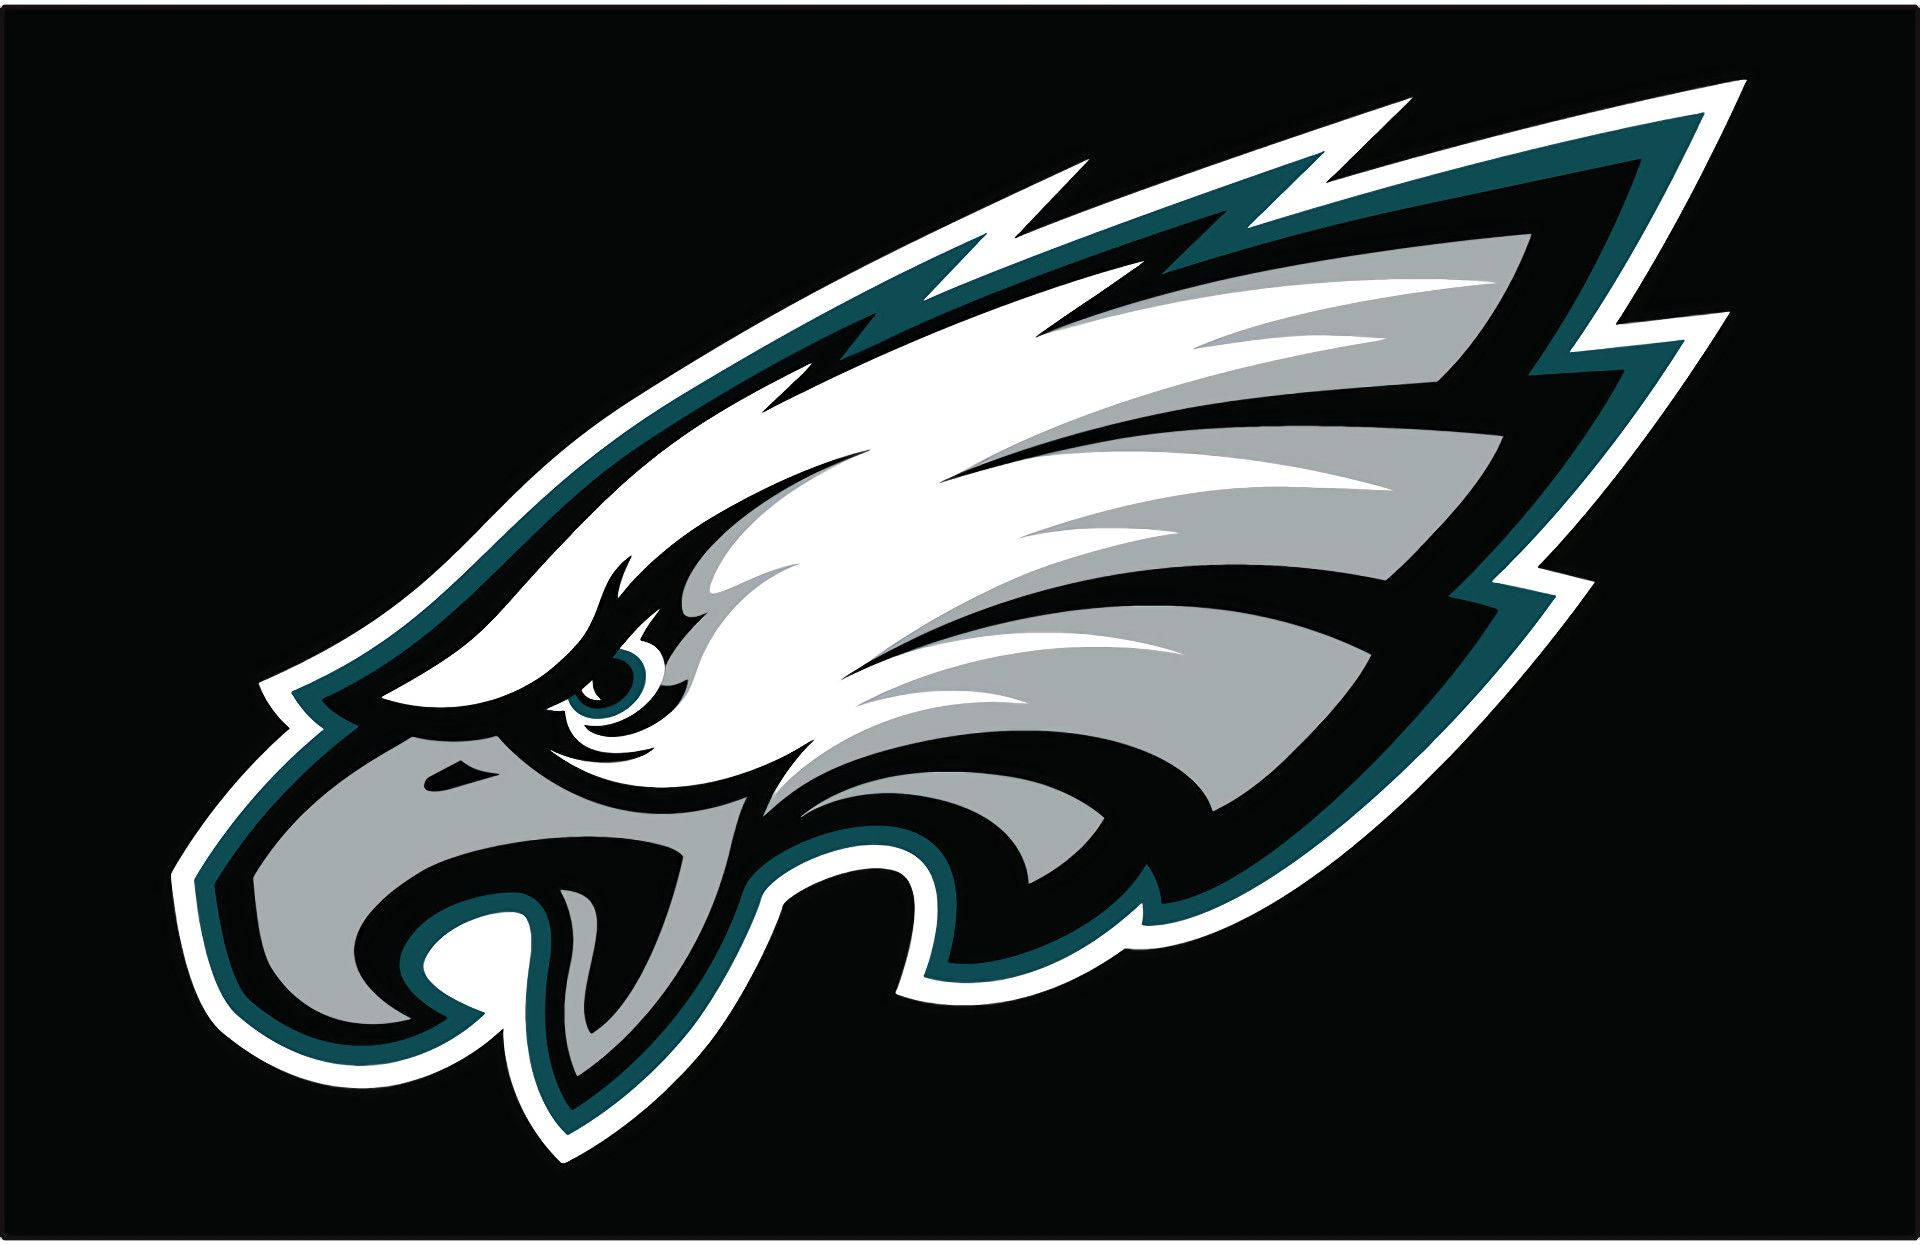 100+] Philadelphia Eagles Backgrounds